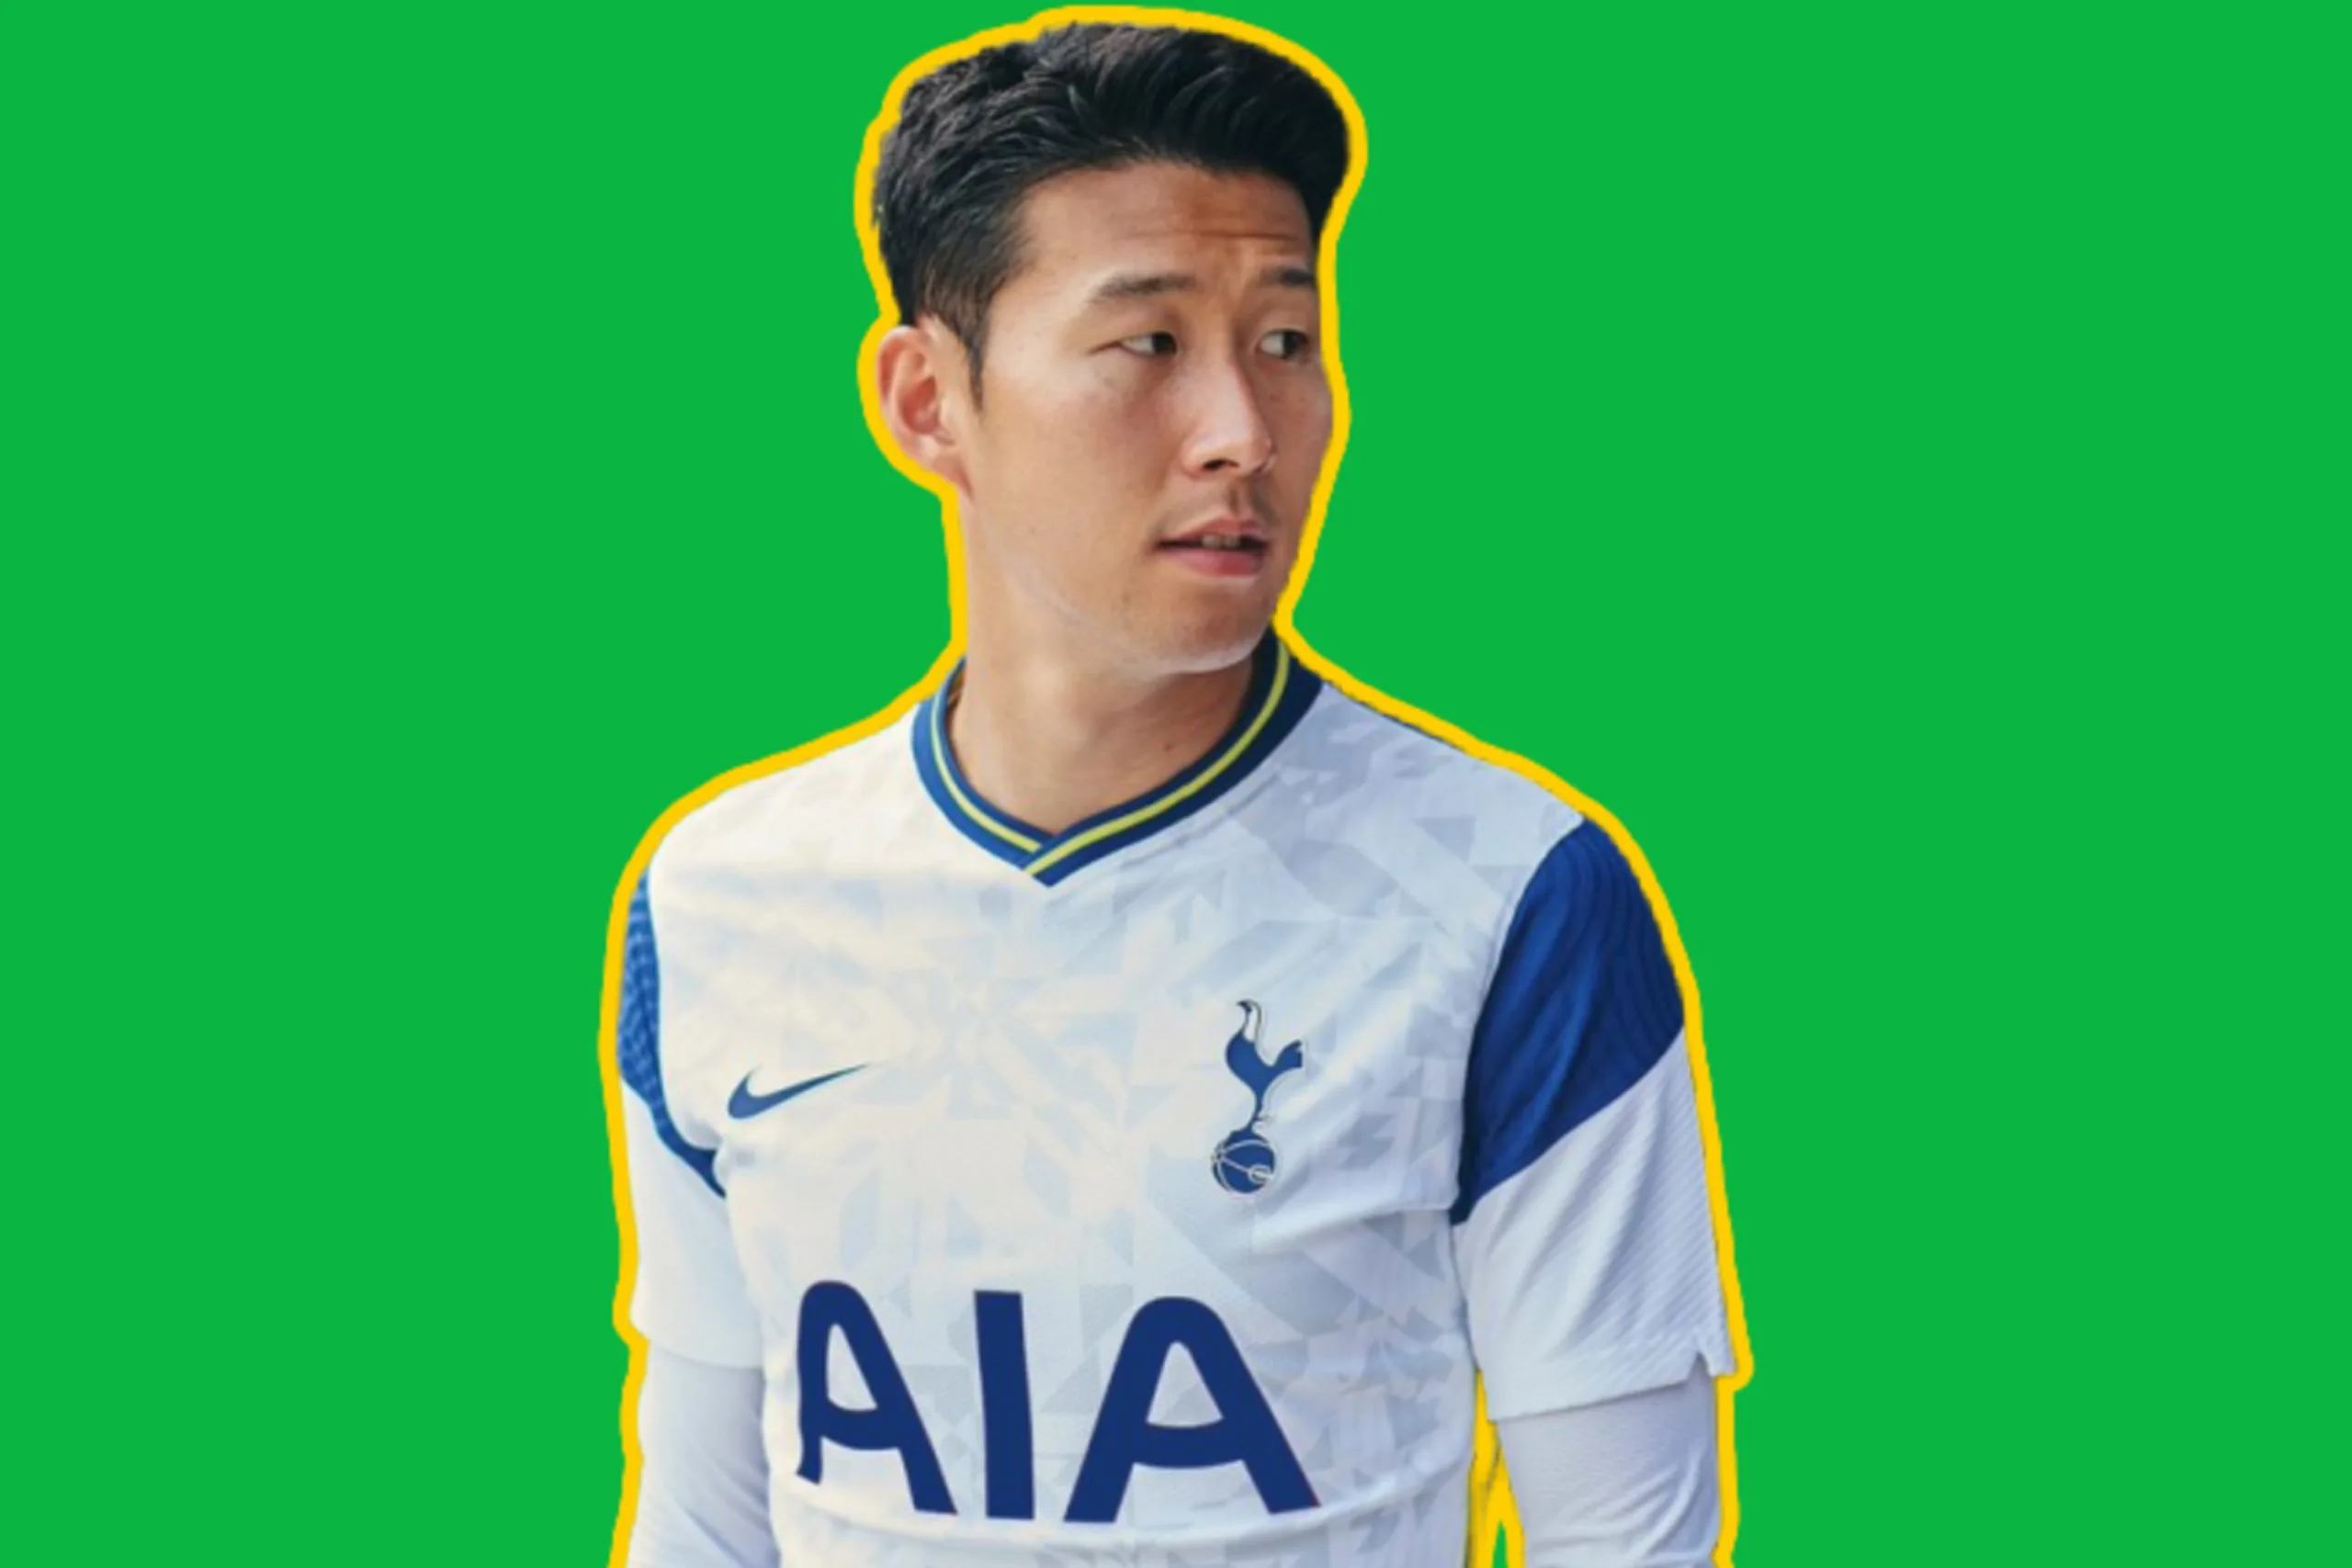 Son Heung-min in Tottenham home kit foe 20/21 season with an edited blue AIA logo